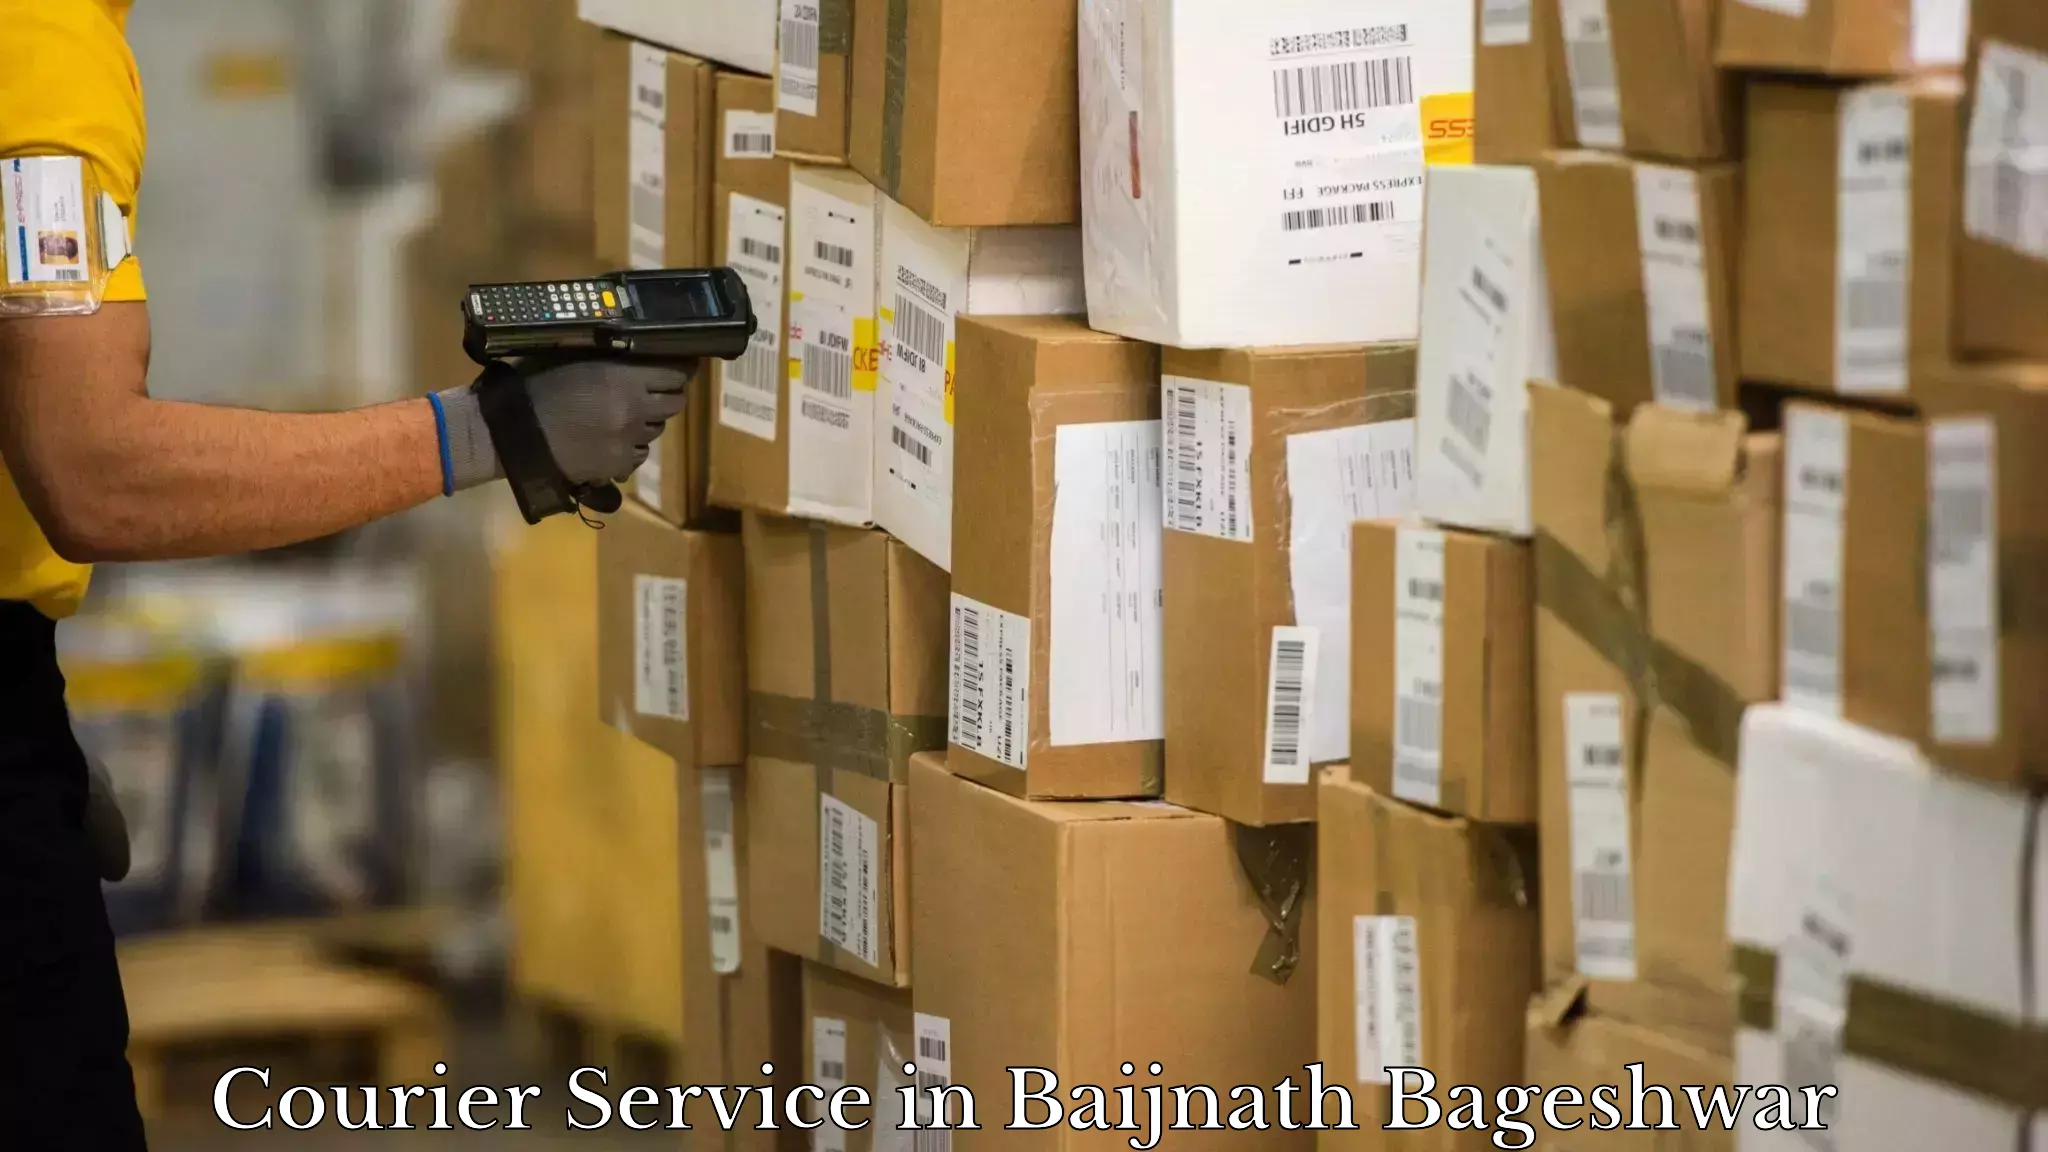 Comprehensive logistics in Baijnath Bageshwar